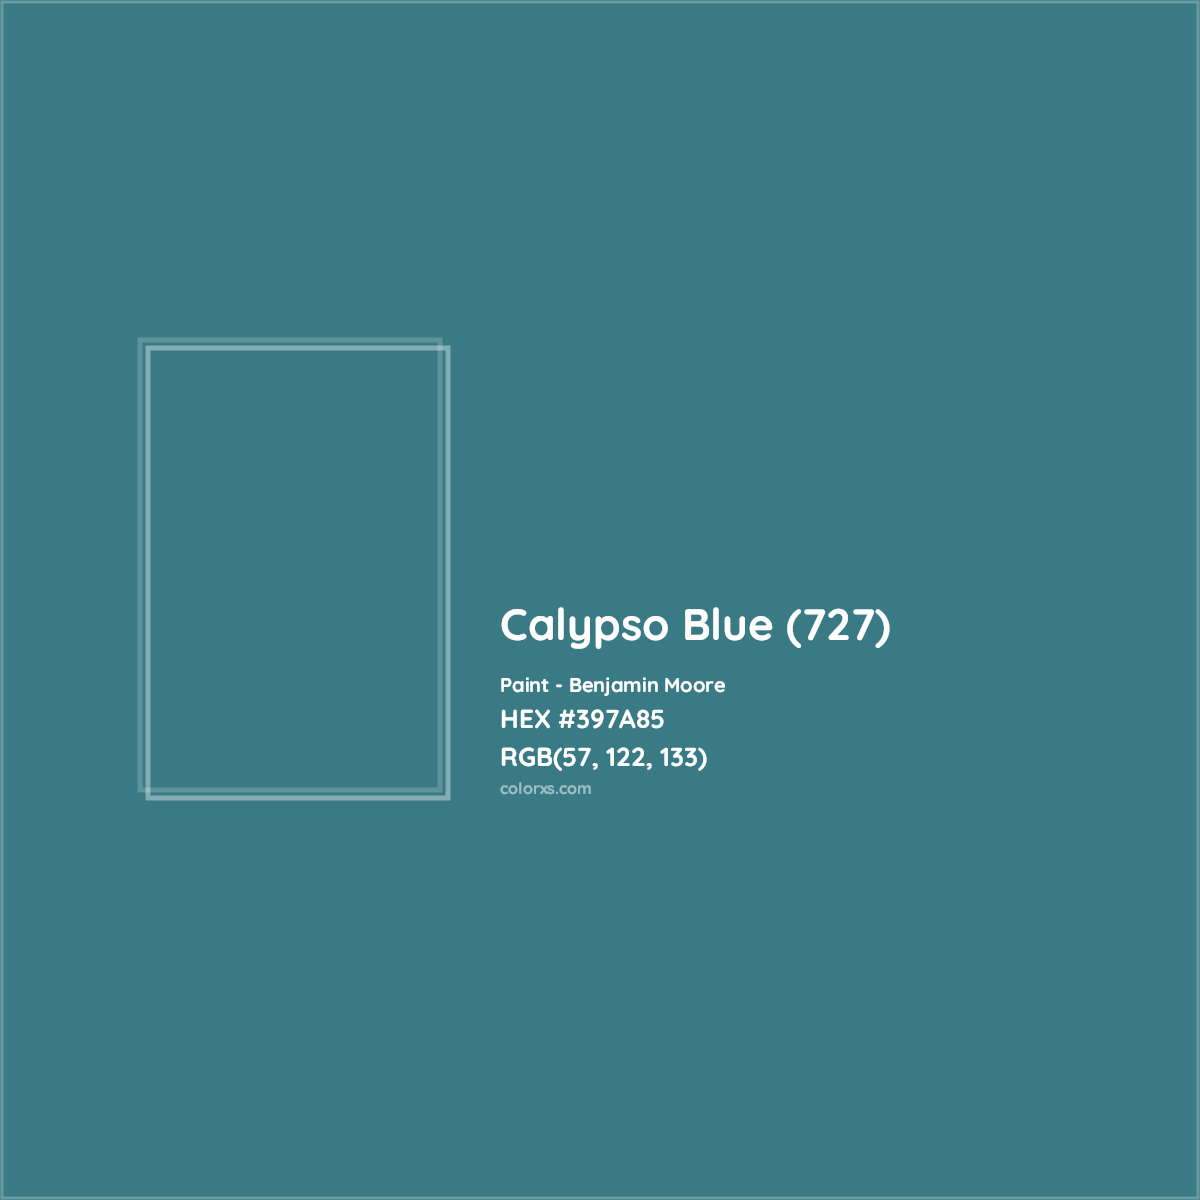 HEX #397A85 Calypso Blue (727) Paint Benjamin Moore - Color Code